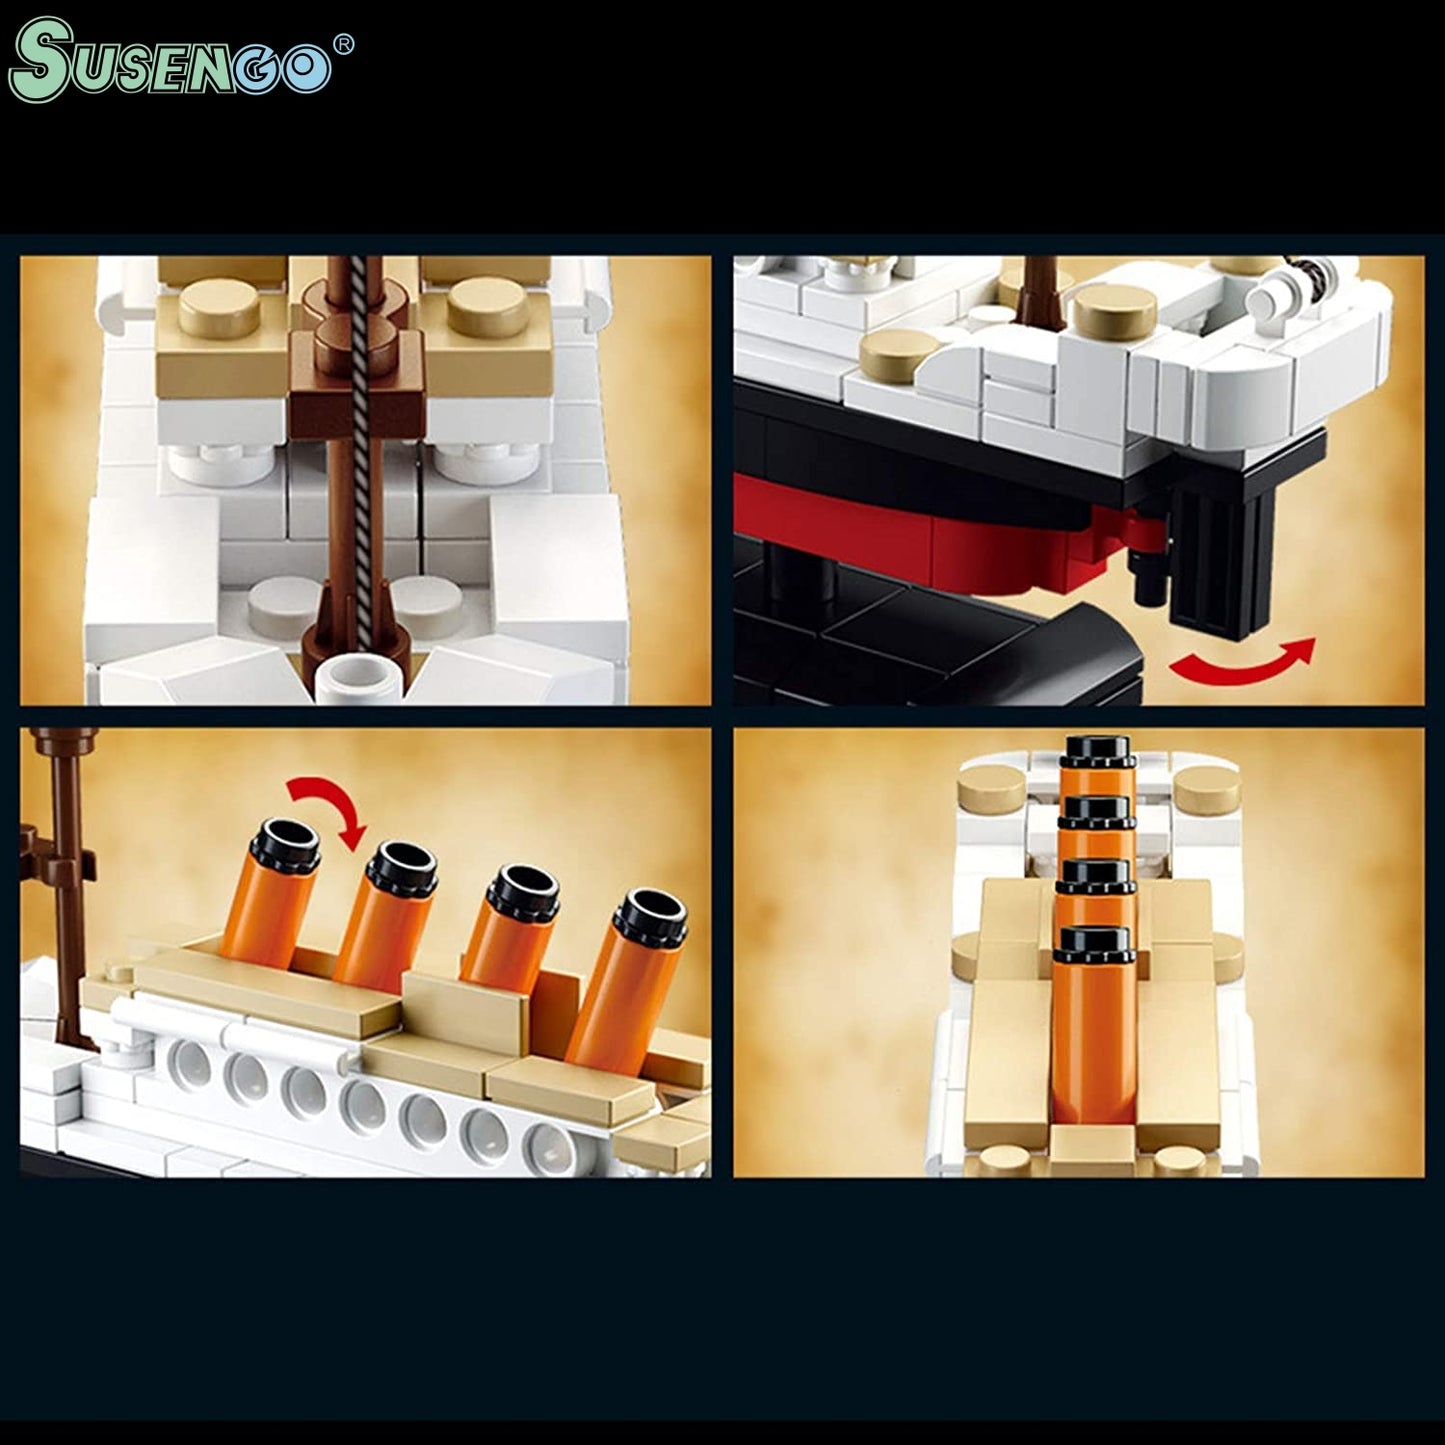 SUSENGO Toy building blocks capable of interconnection